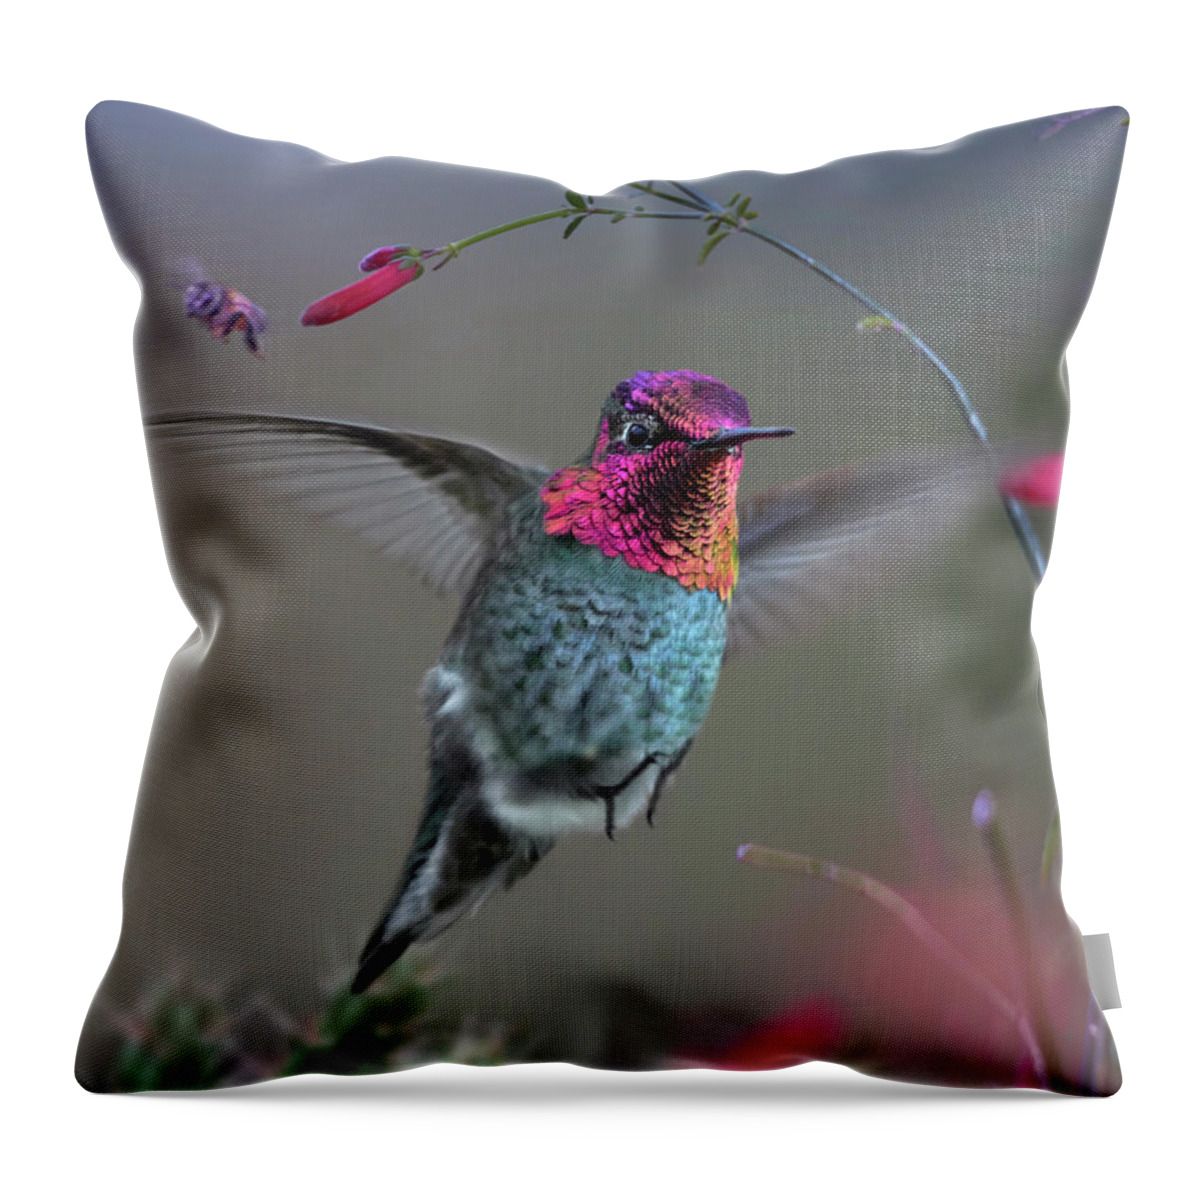 00557658 Throw Pillow featuring the photograph Anna's Hummingbird, Arizona by Tim Fitzharris